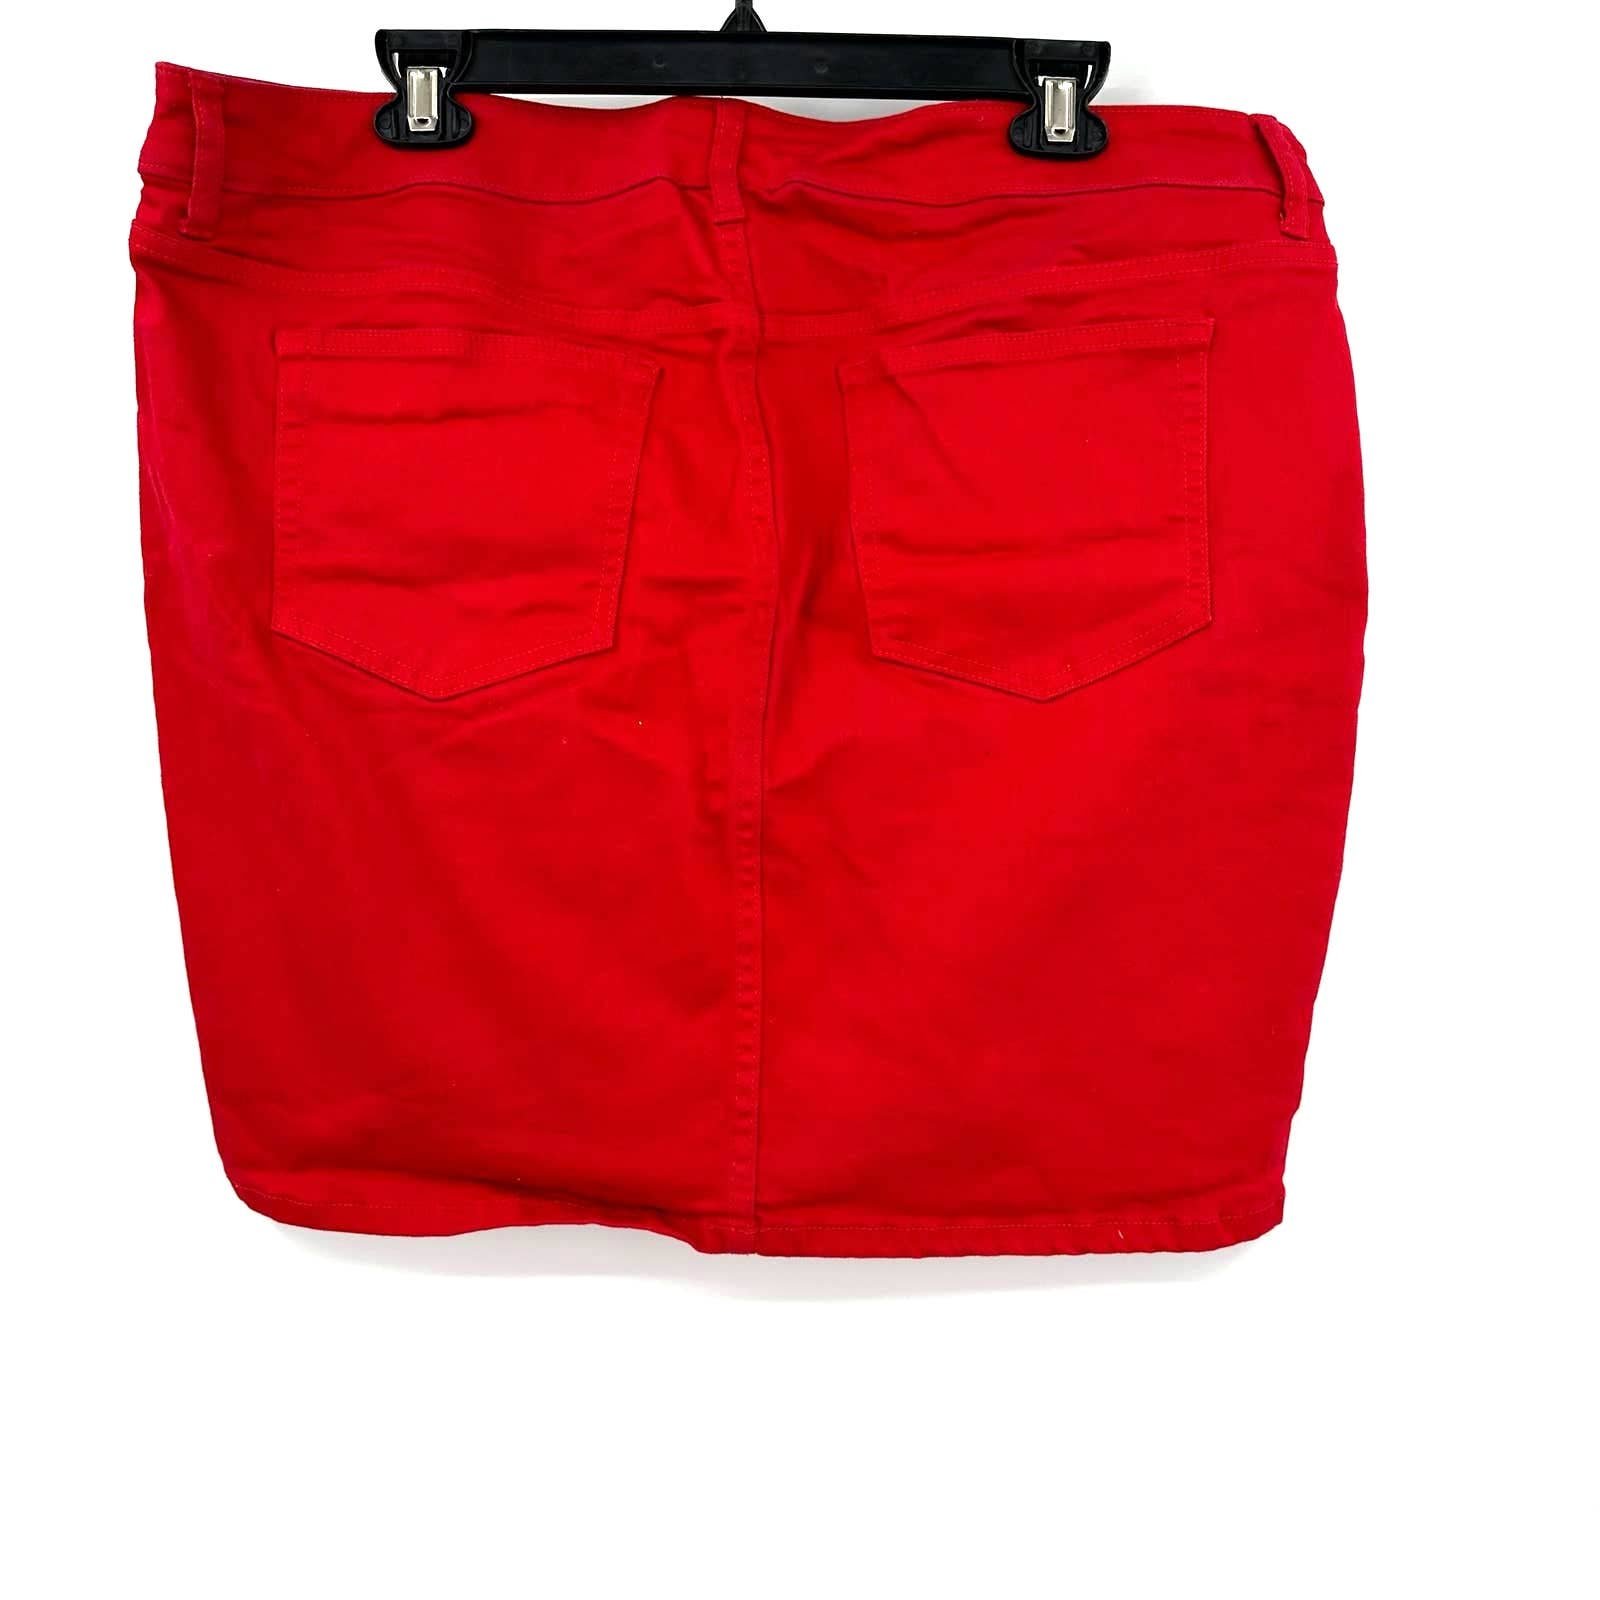 Comfortable Torrid size 18 red denim jean pencil skirt cotton spandex blend pGlXm7G1x Novel 